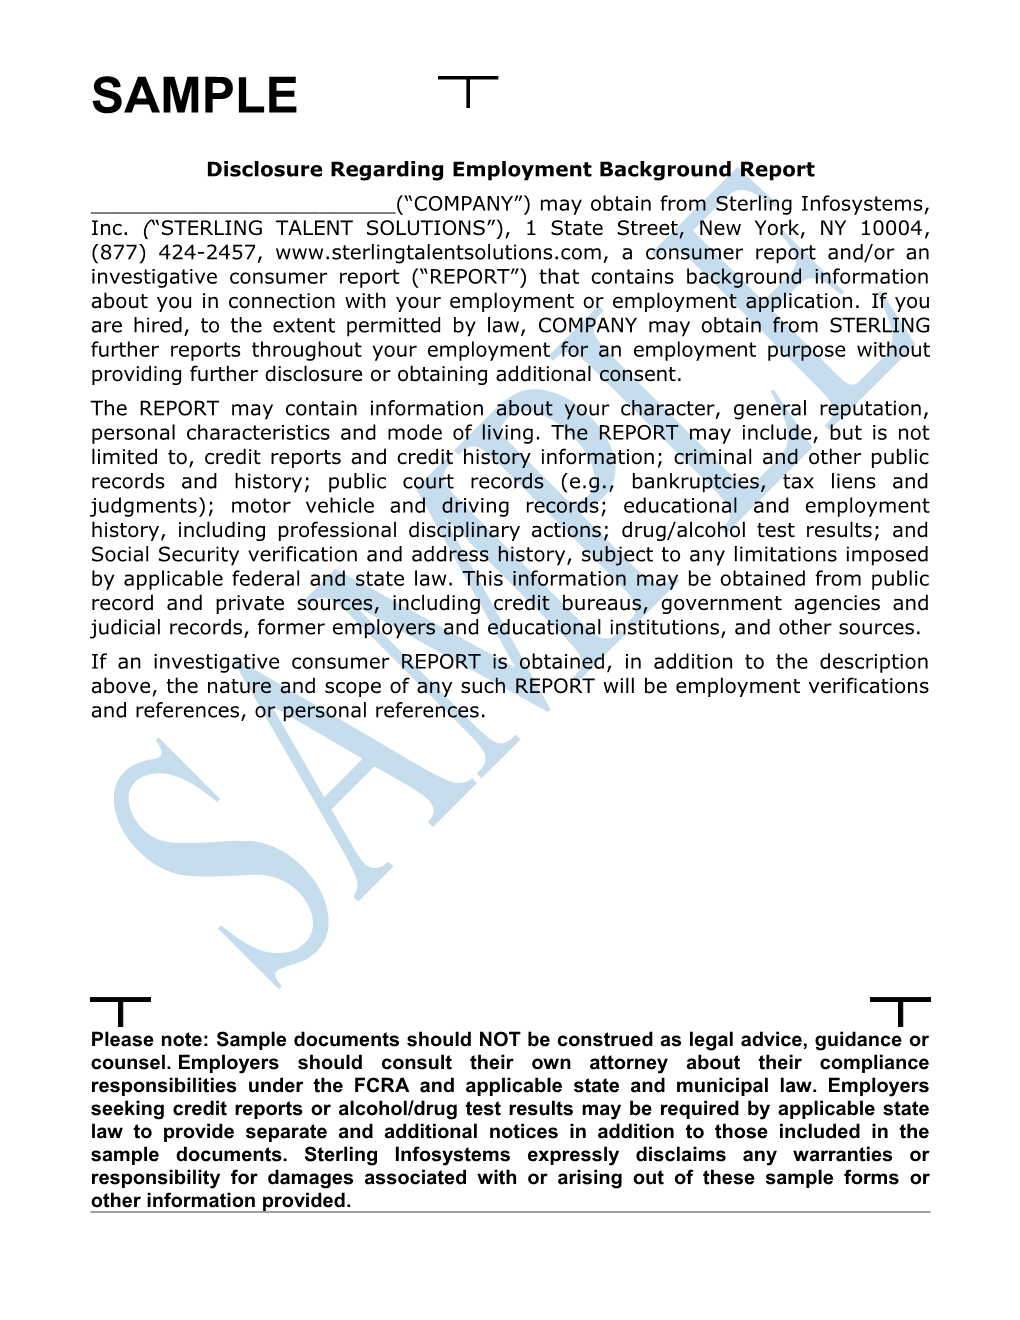 Disclosure Regarding Employment Background Report